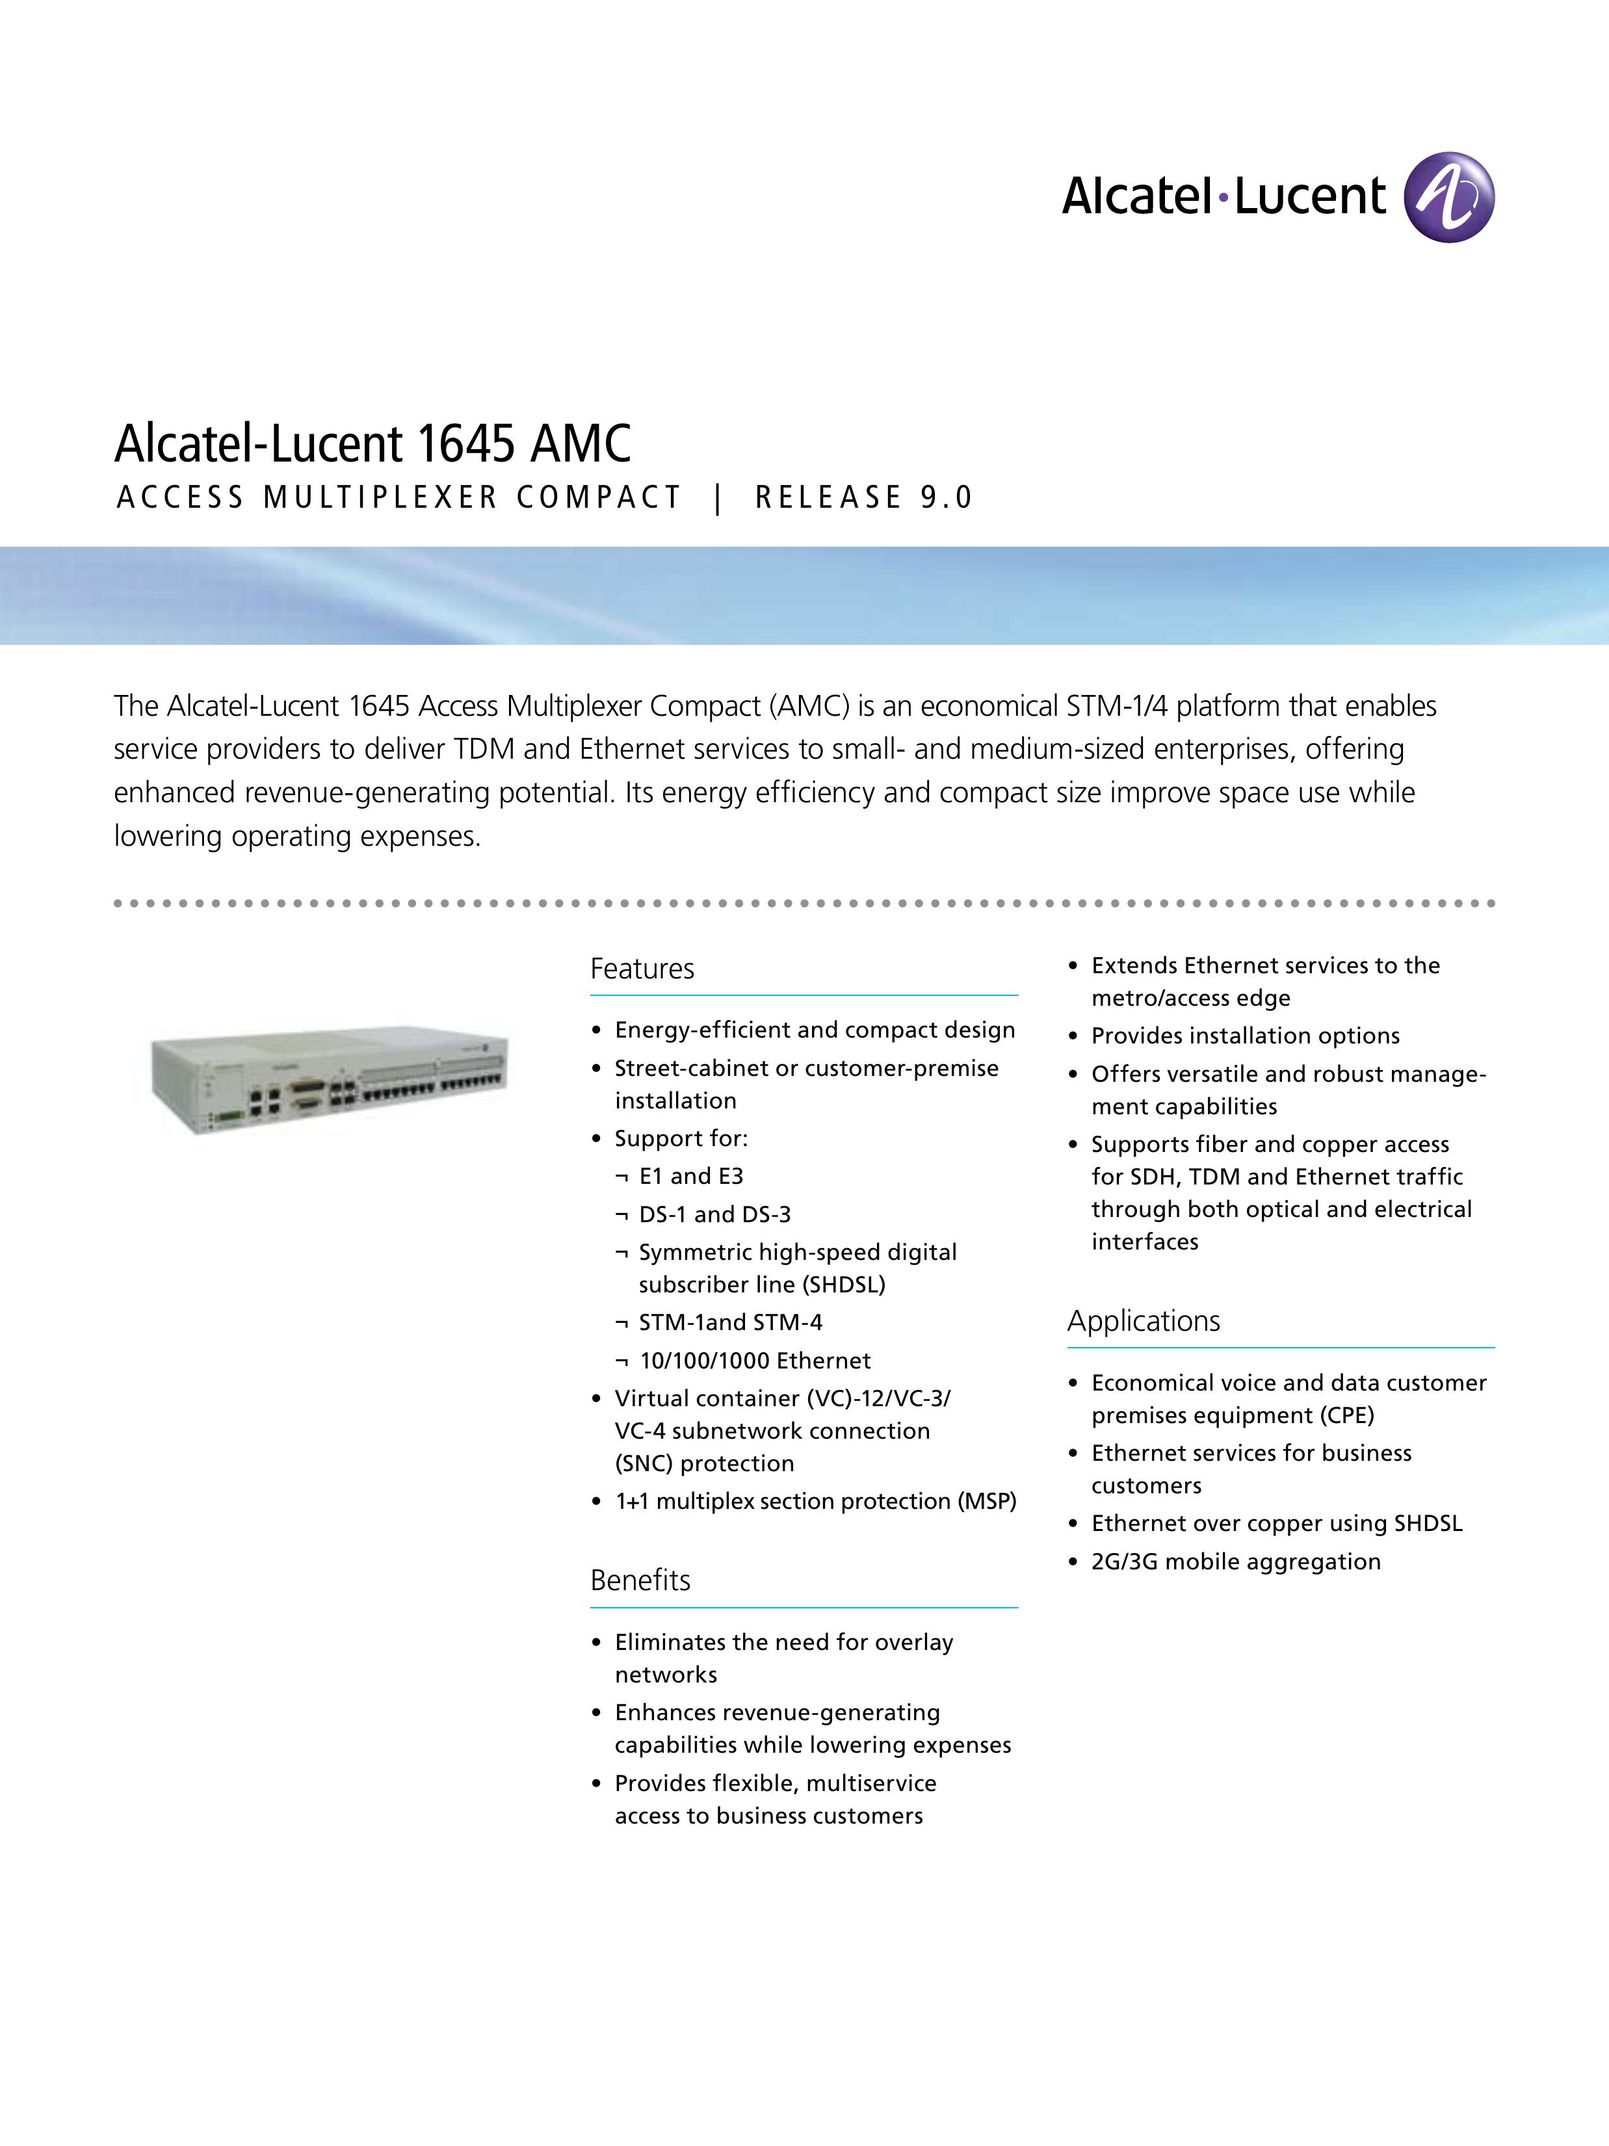 Alcatel-Lucent 1645 AMC Network Card User Manual